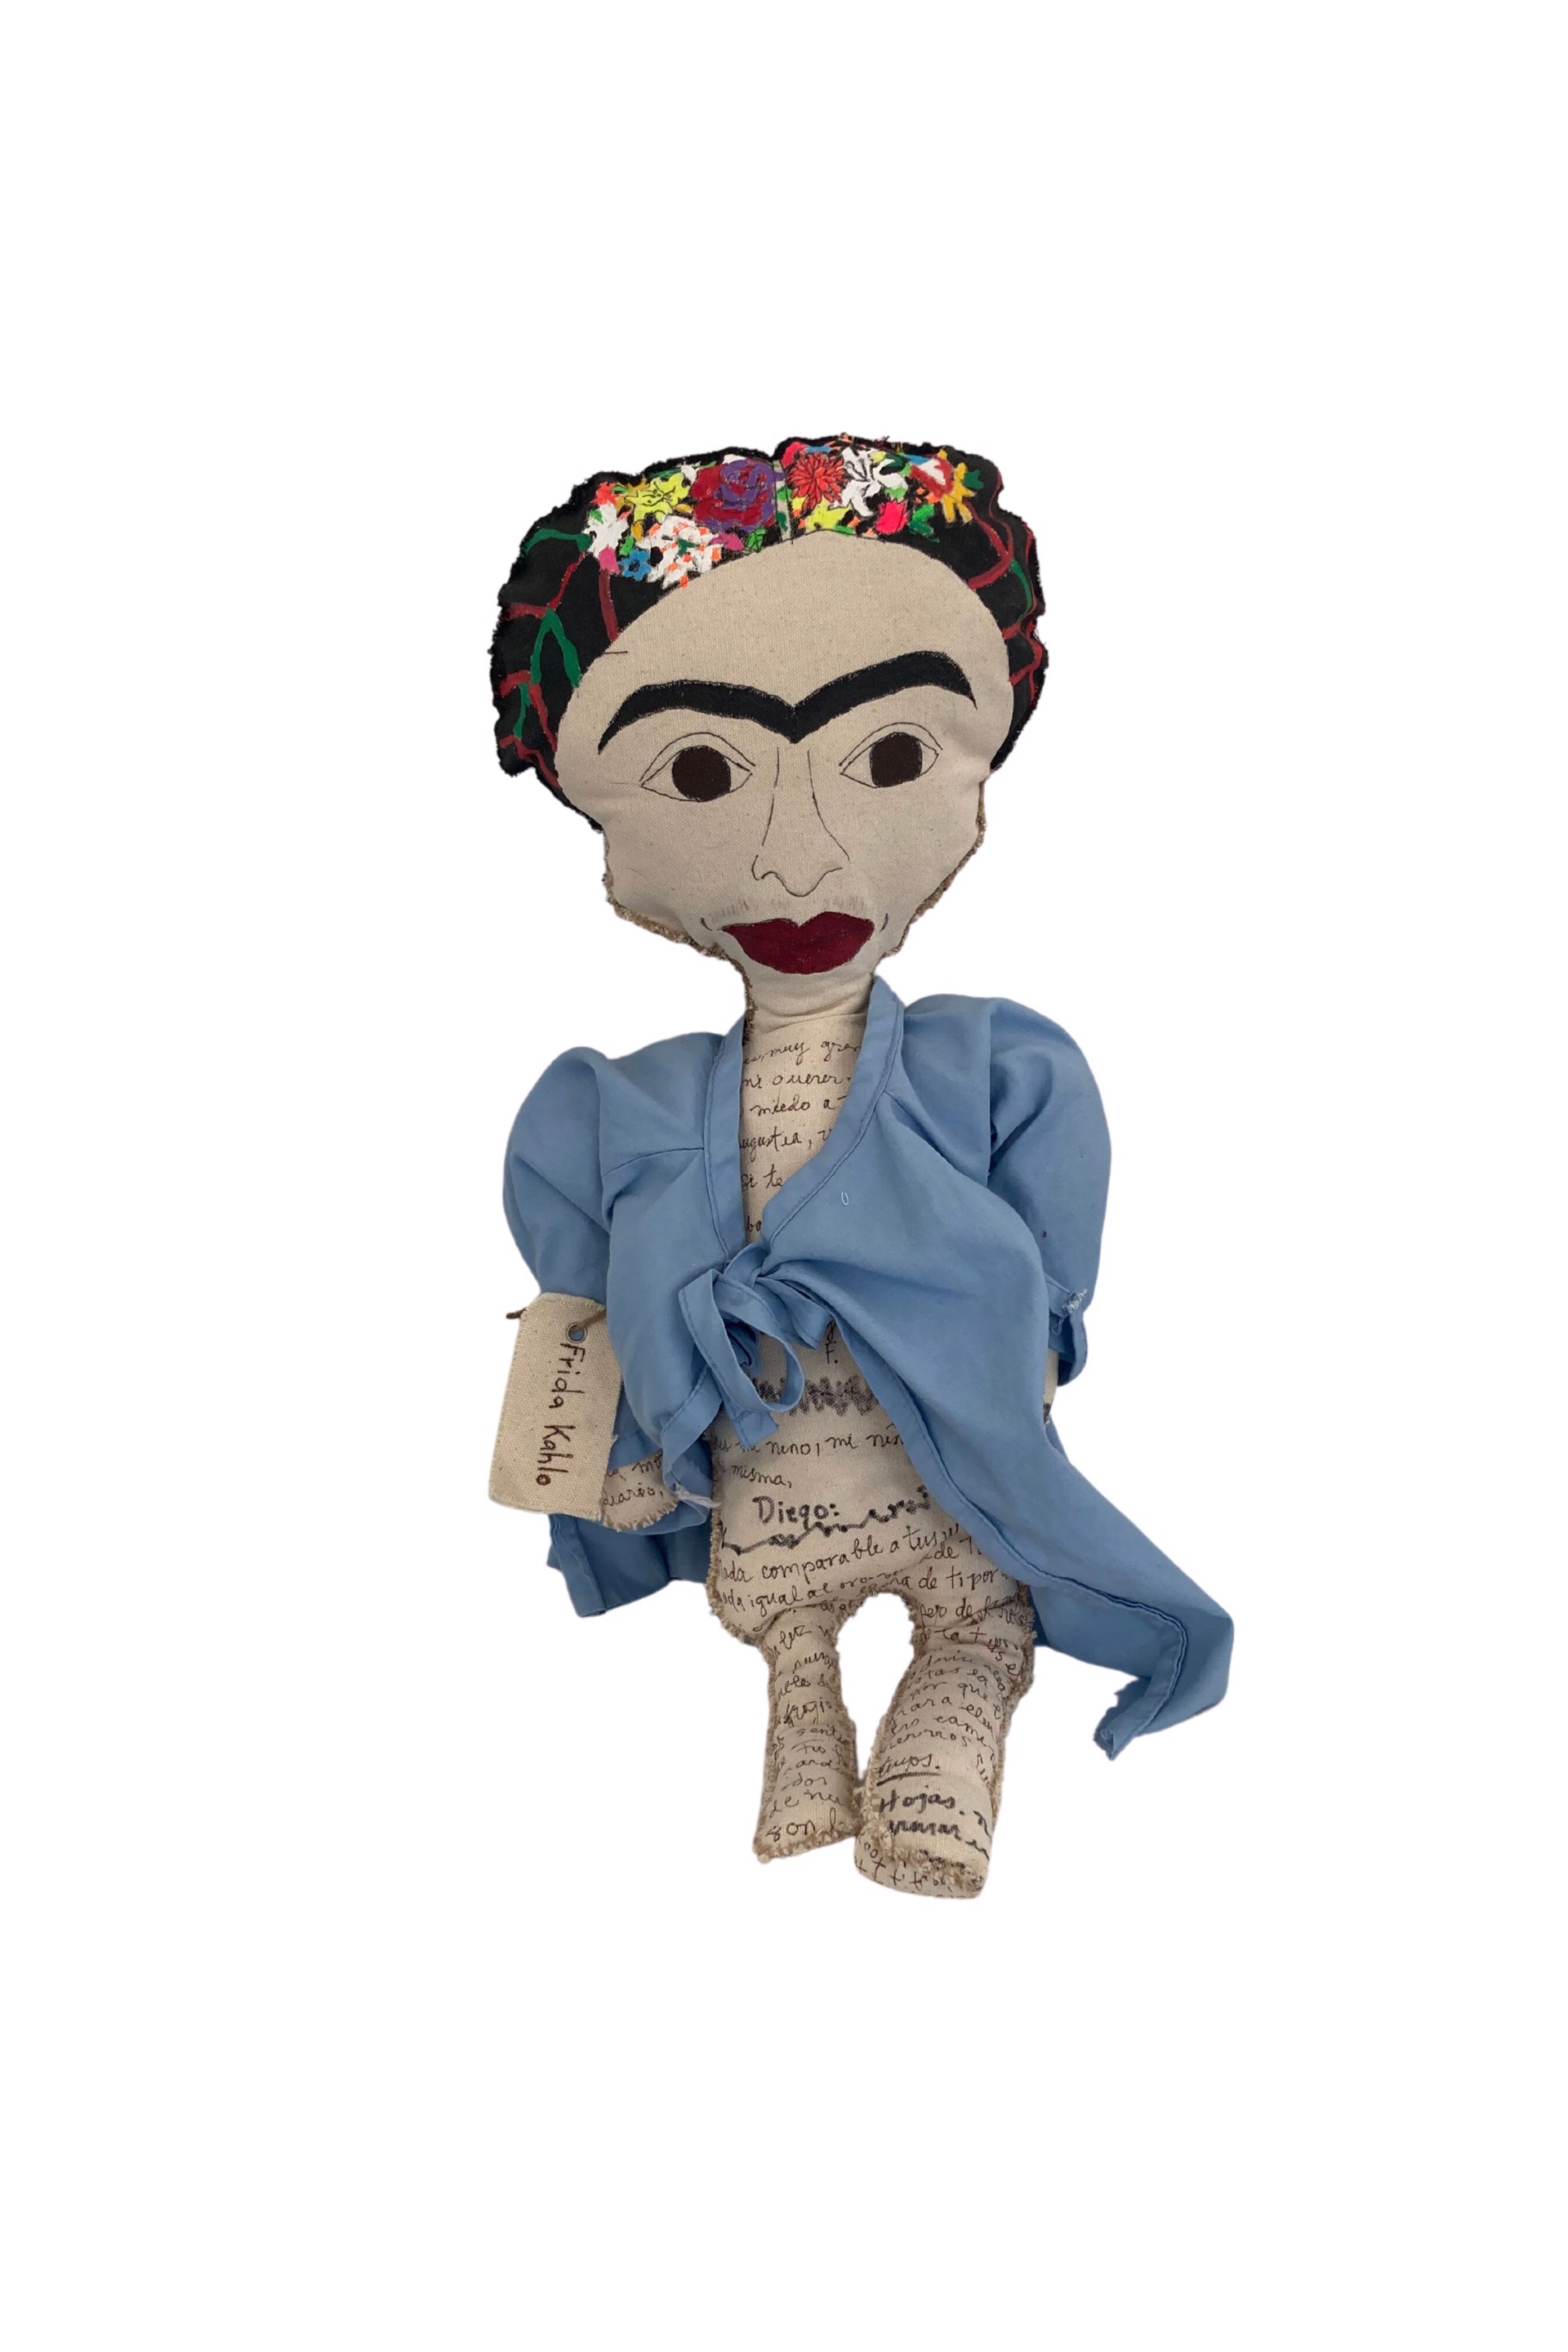 Frida Kahlo (Asylum Doll) by Susan Spangenberg